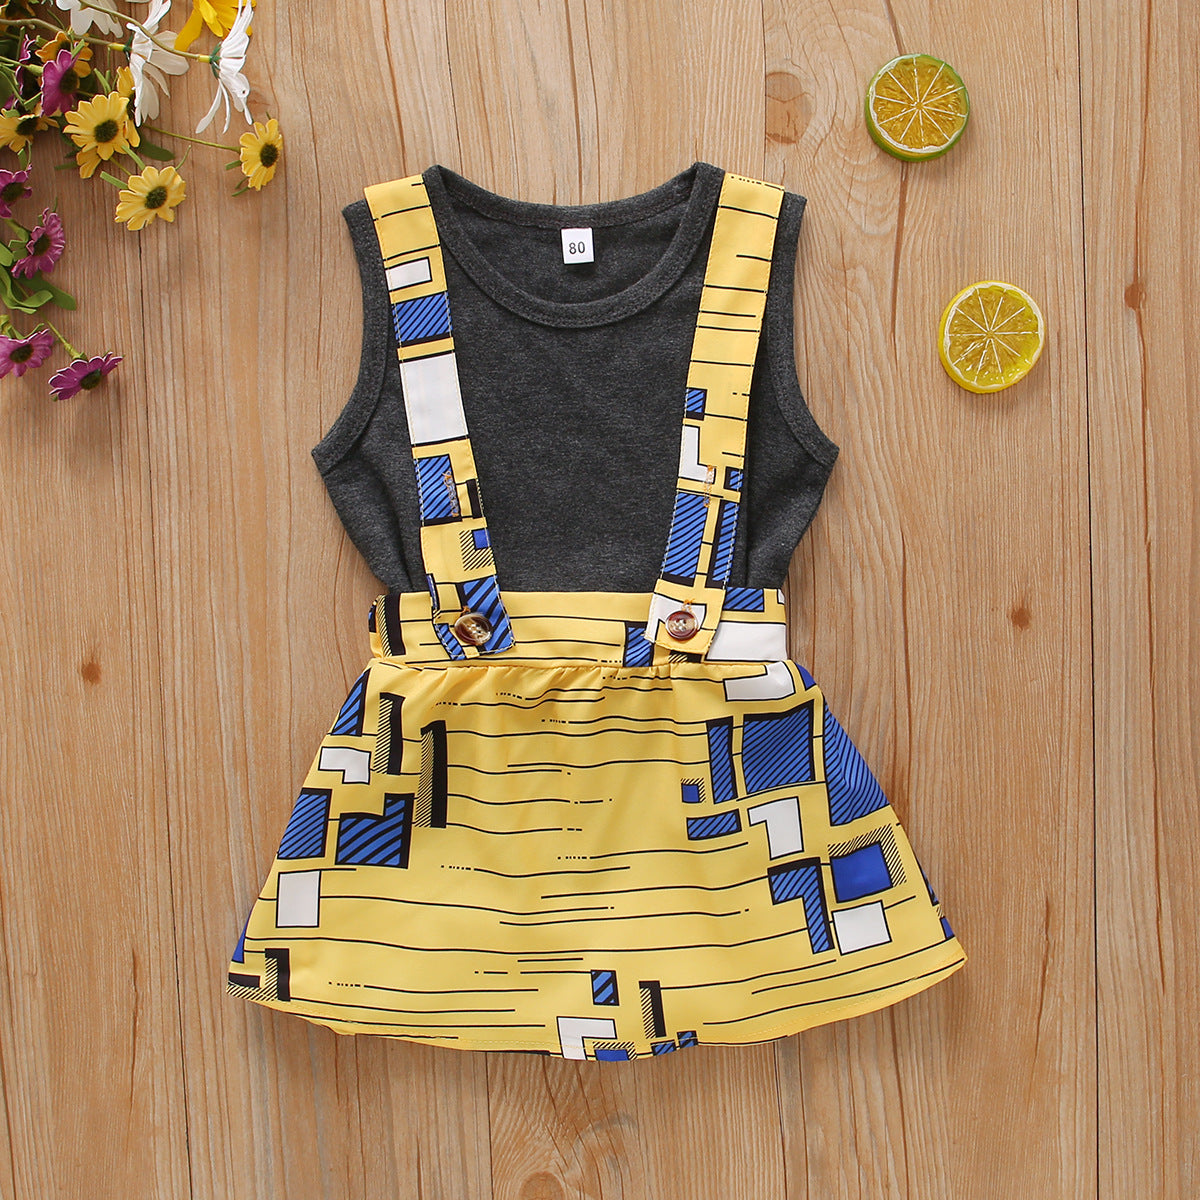 Toddler Kids Girls Solid Color Sleeveless Vest Cartoon Printed Suspender Skirt Set